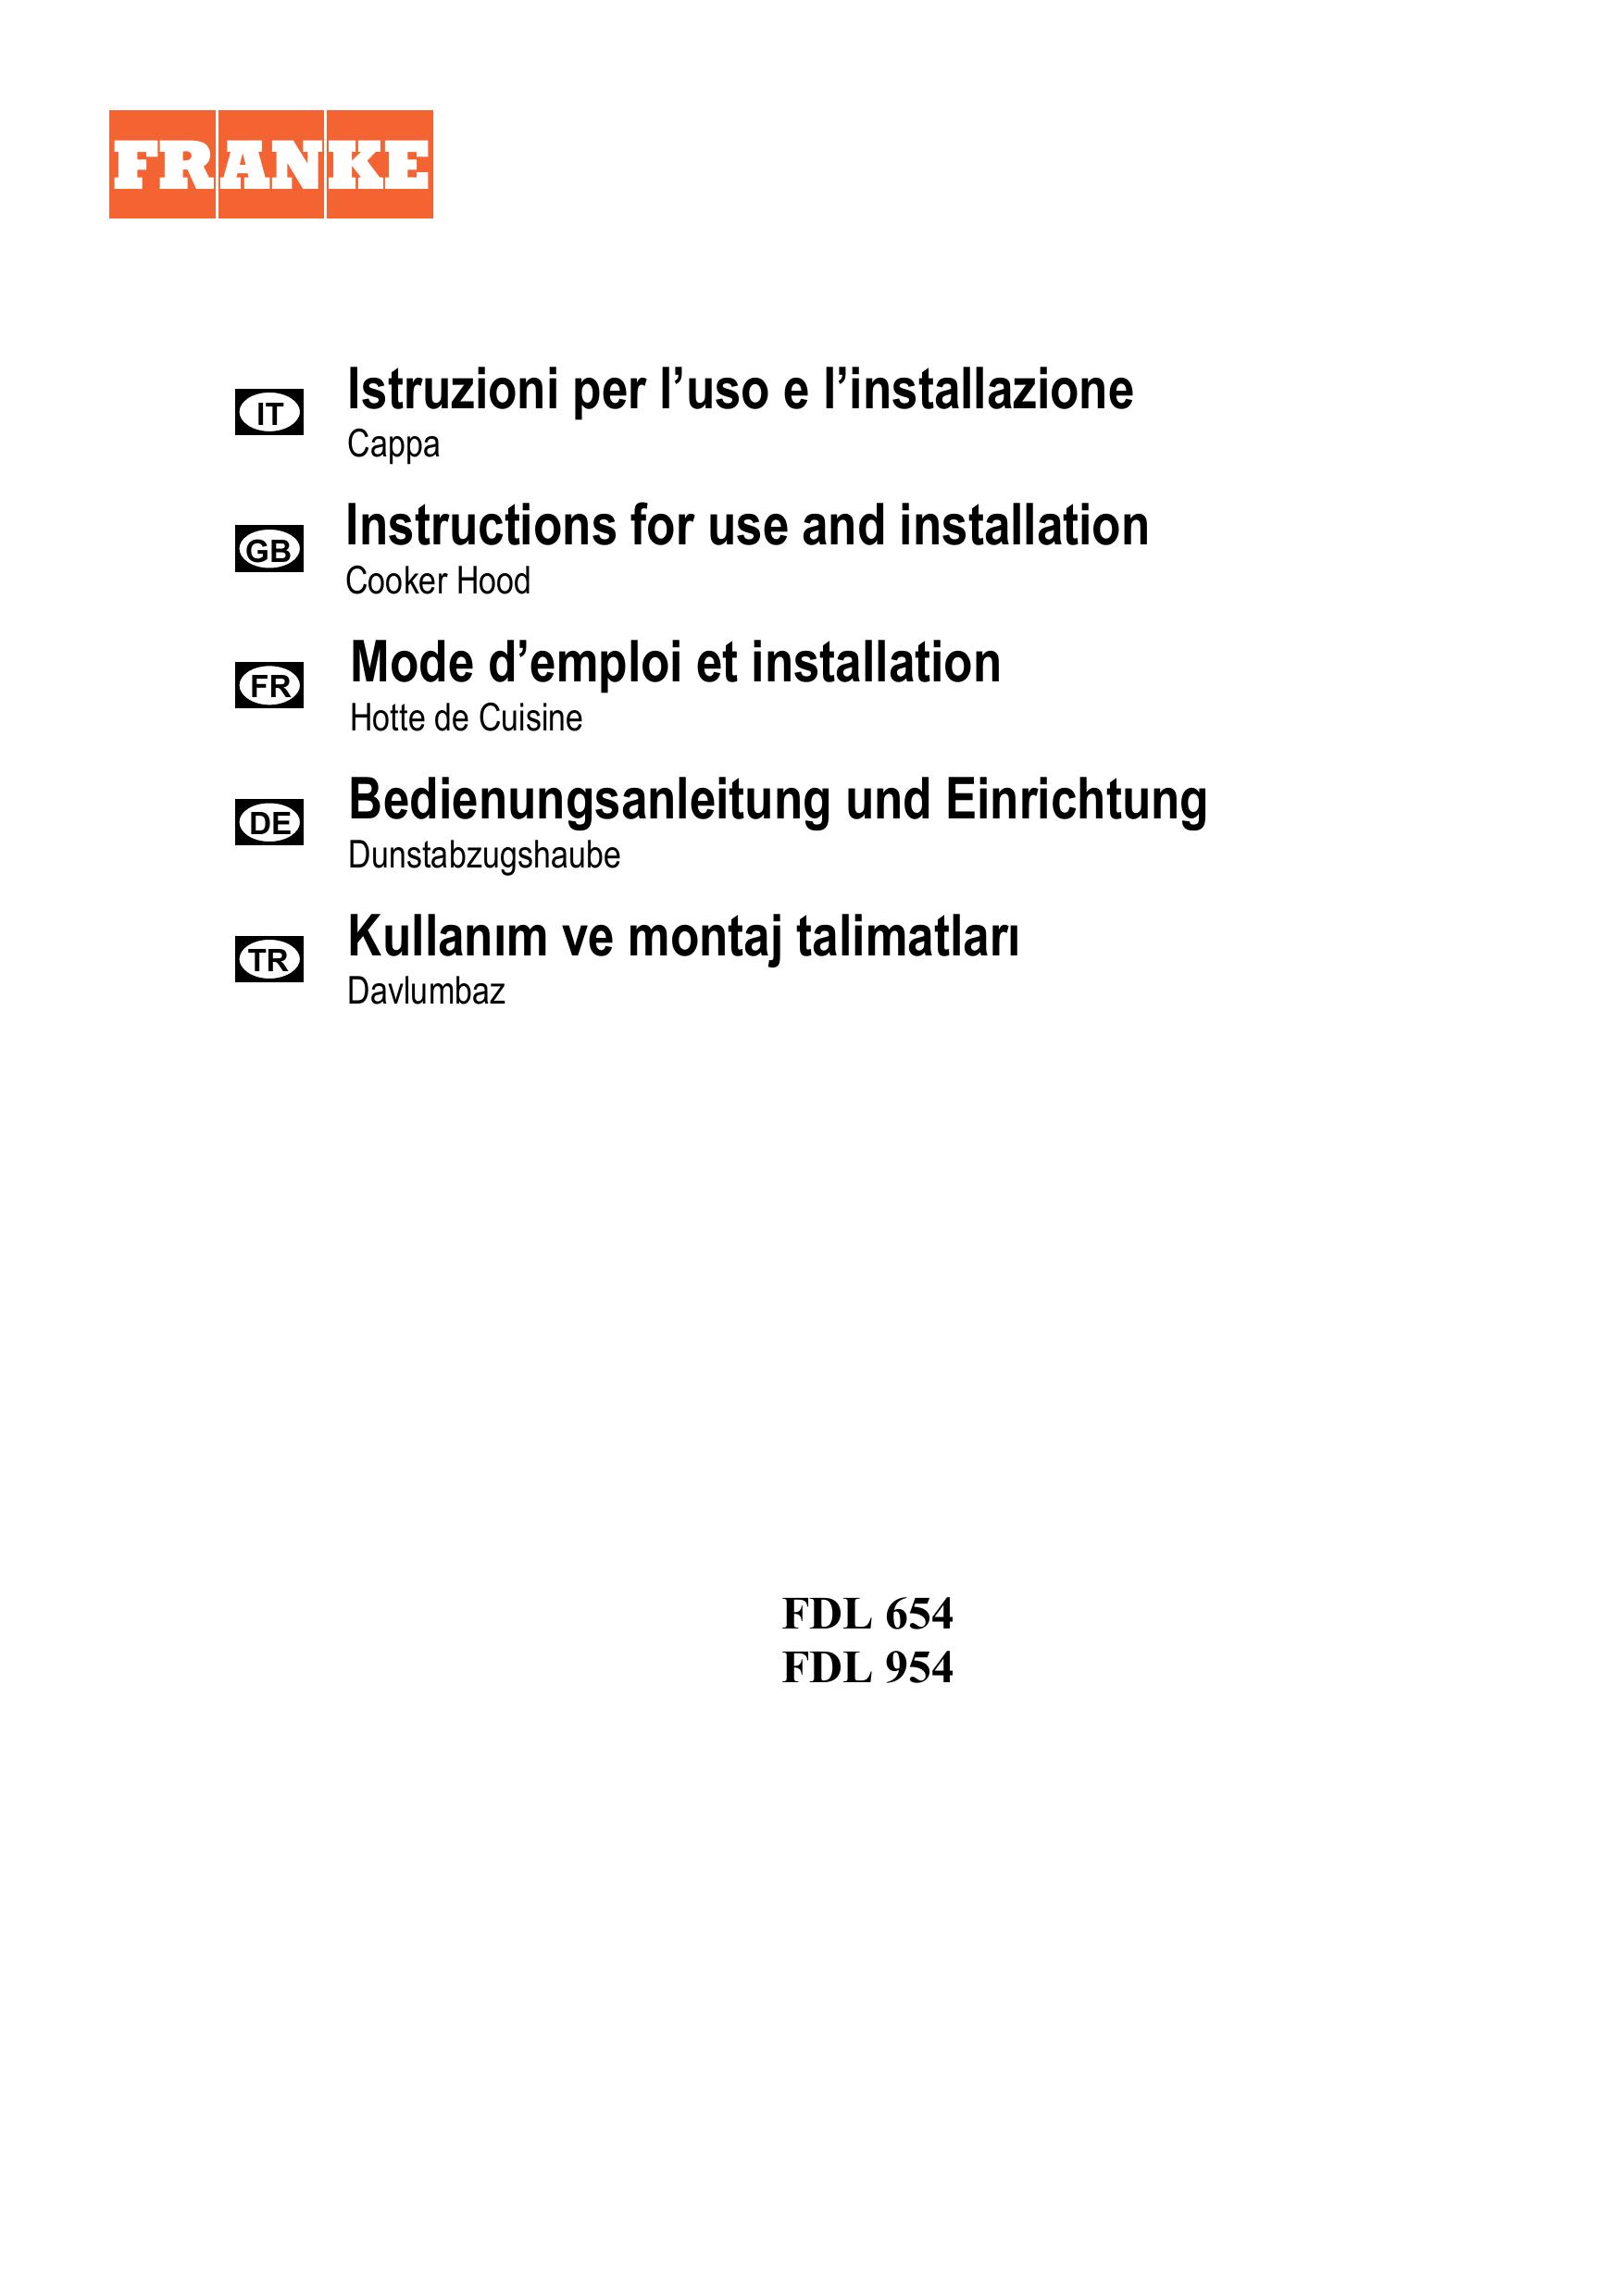 Franke Consumer Products FDL 954 Ventilation Hood User Manual